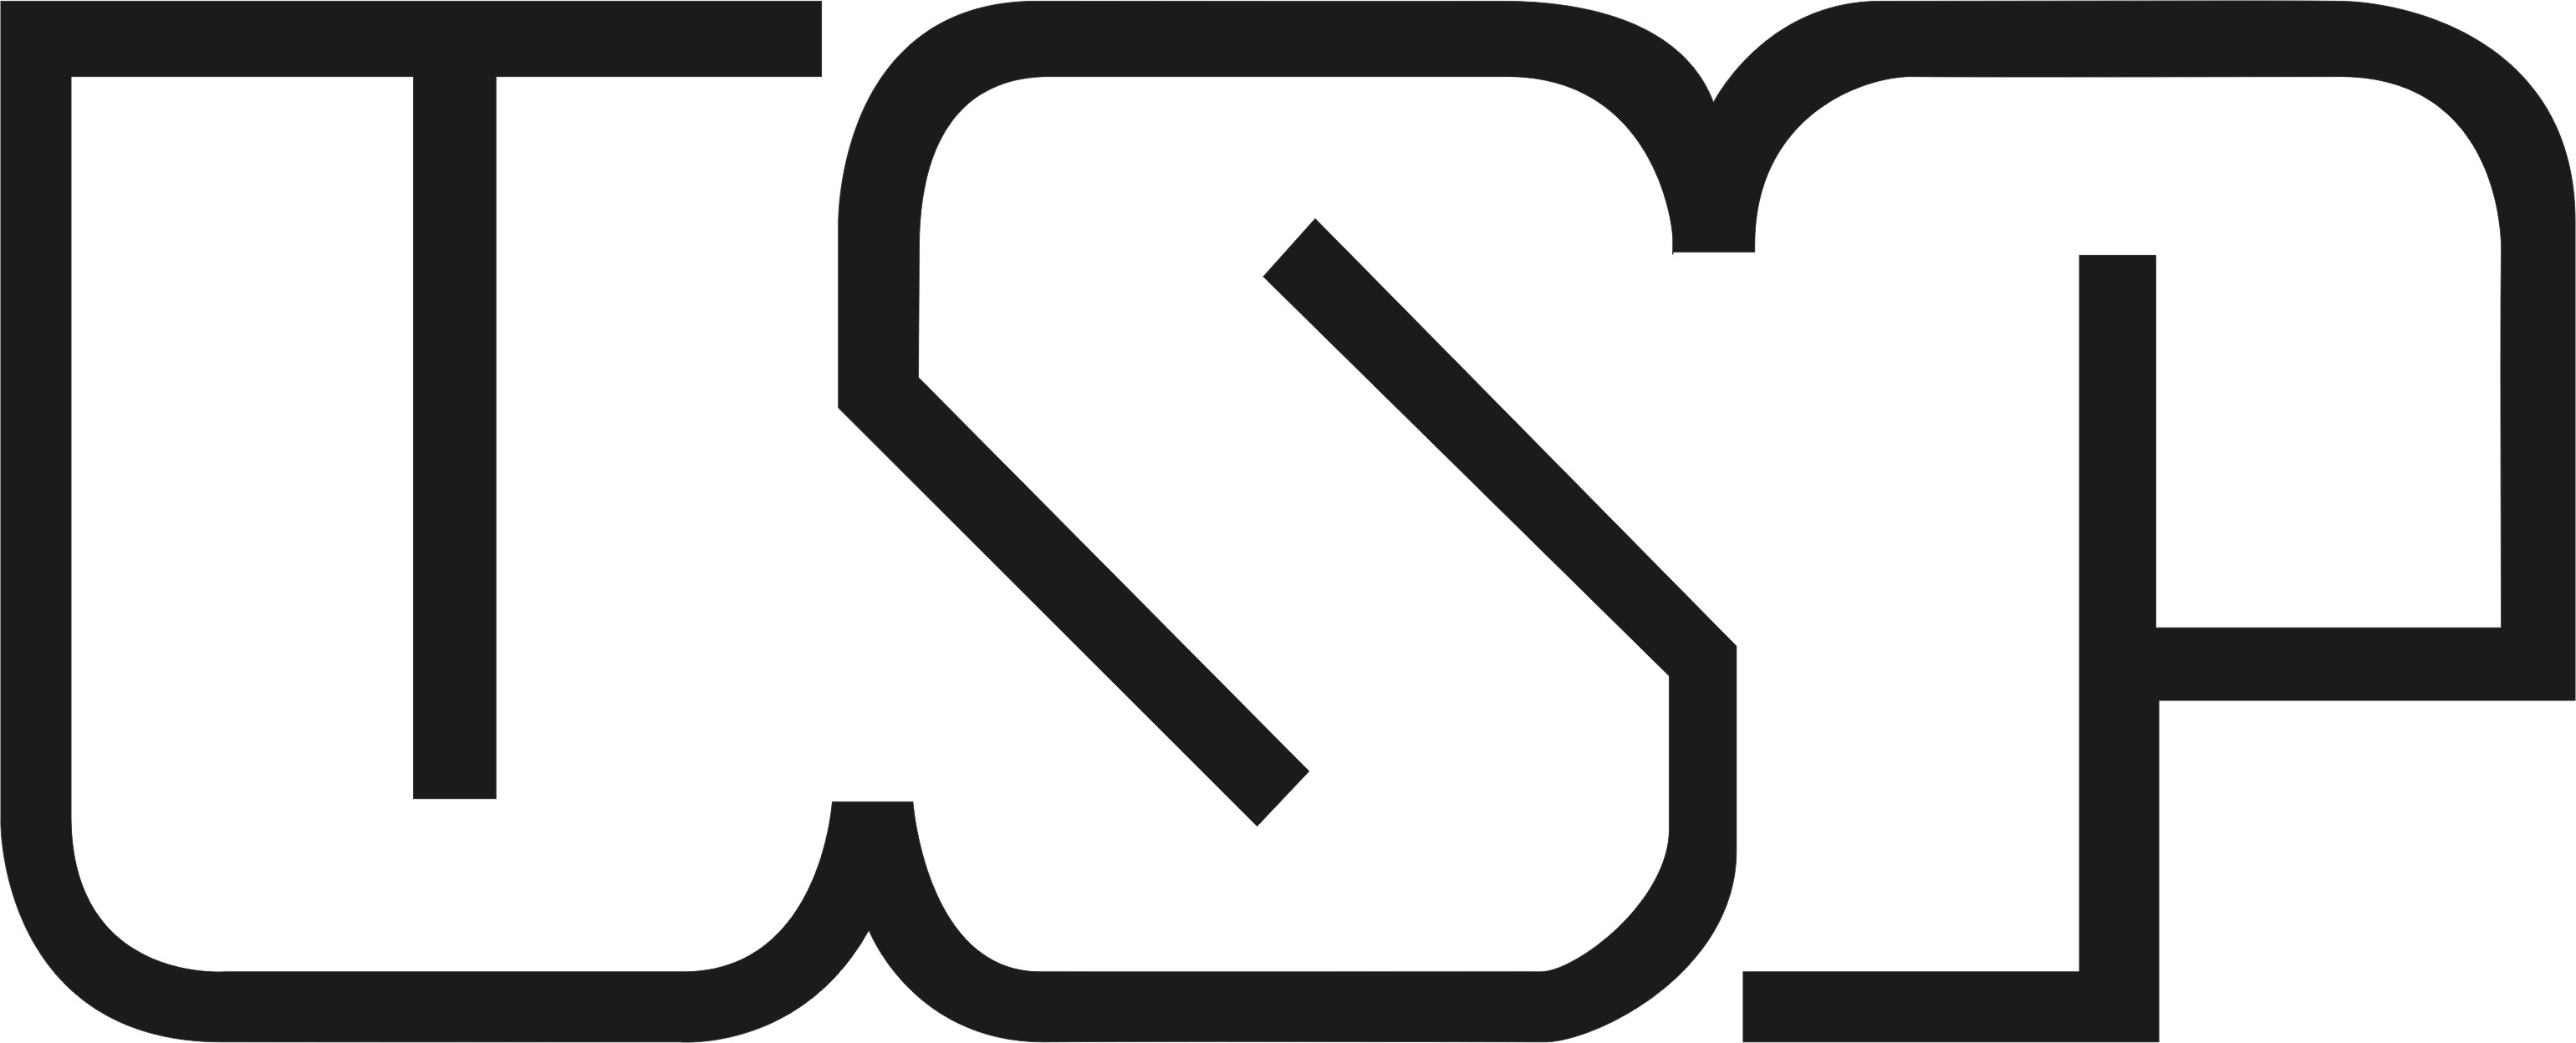 logo_USP